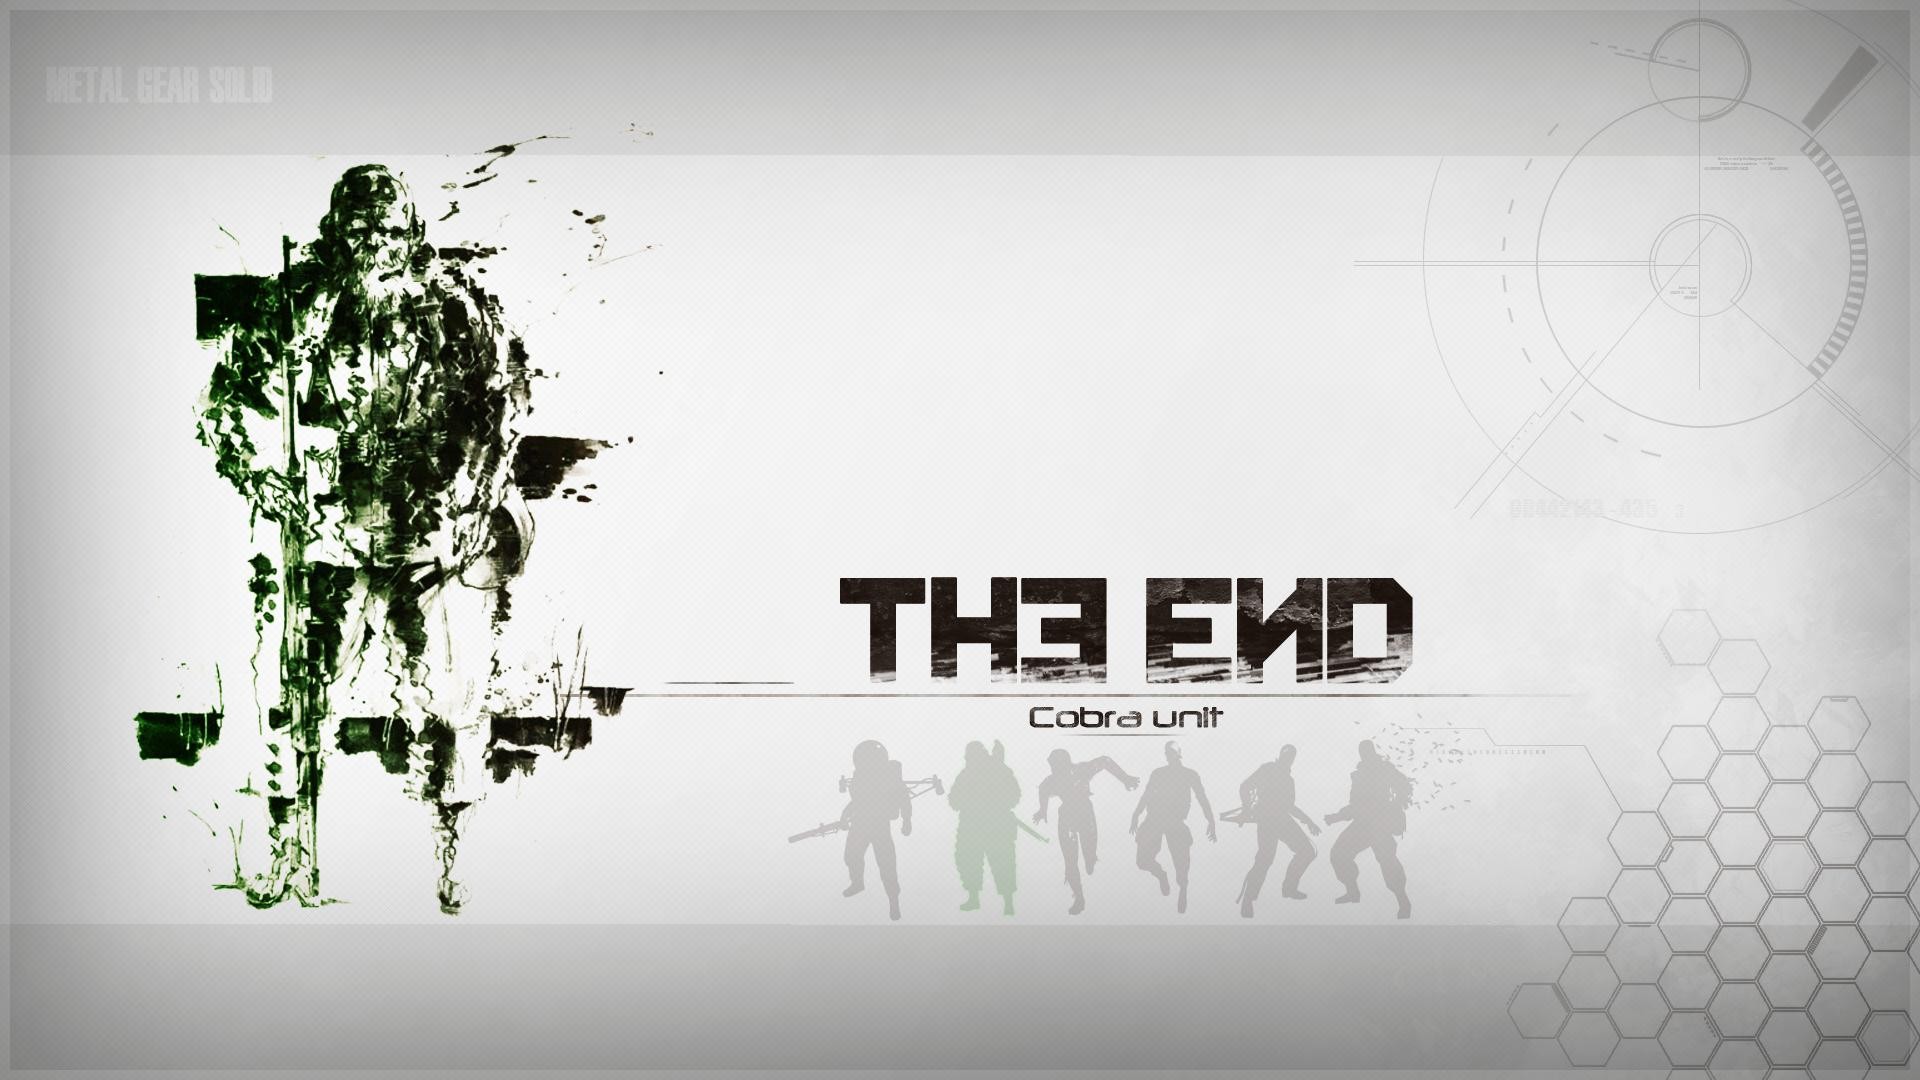 cobra Unit, The End, Metal Gear Solid 3: Snake Eater Wallpaper